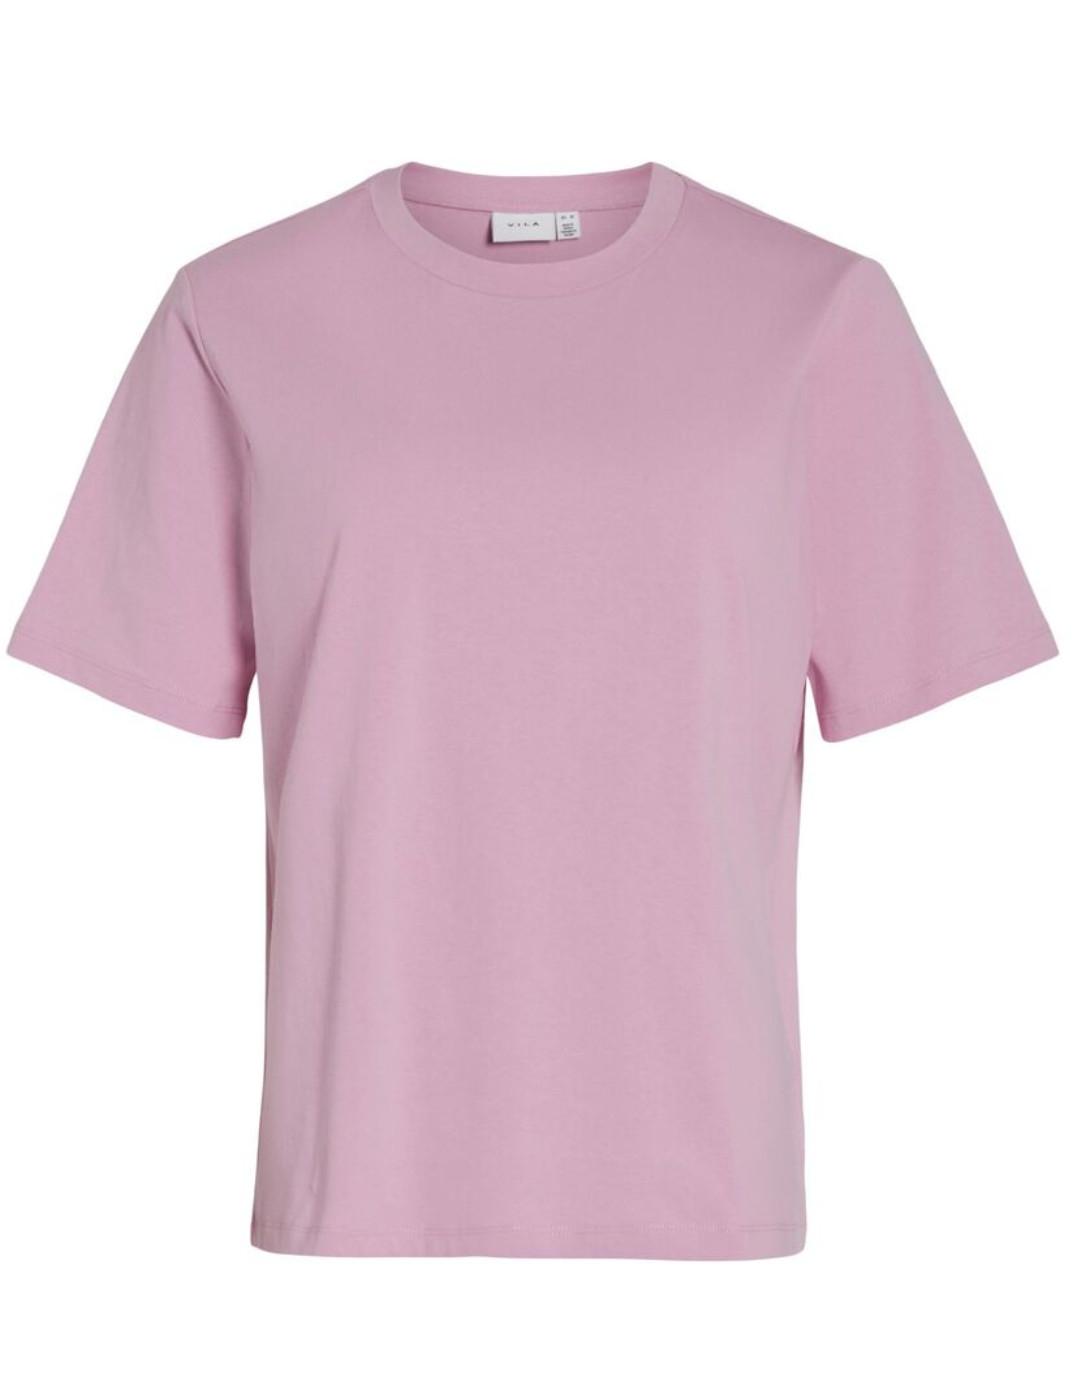 Camiseta Vila Darlene lila Regular manga corta para mujer